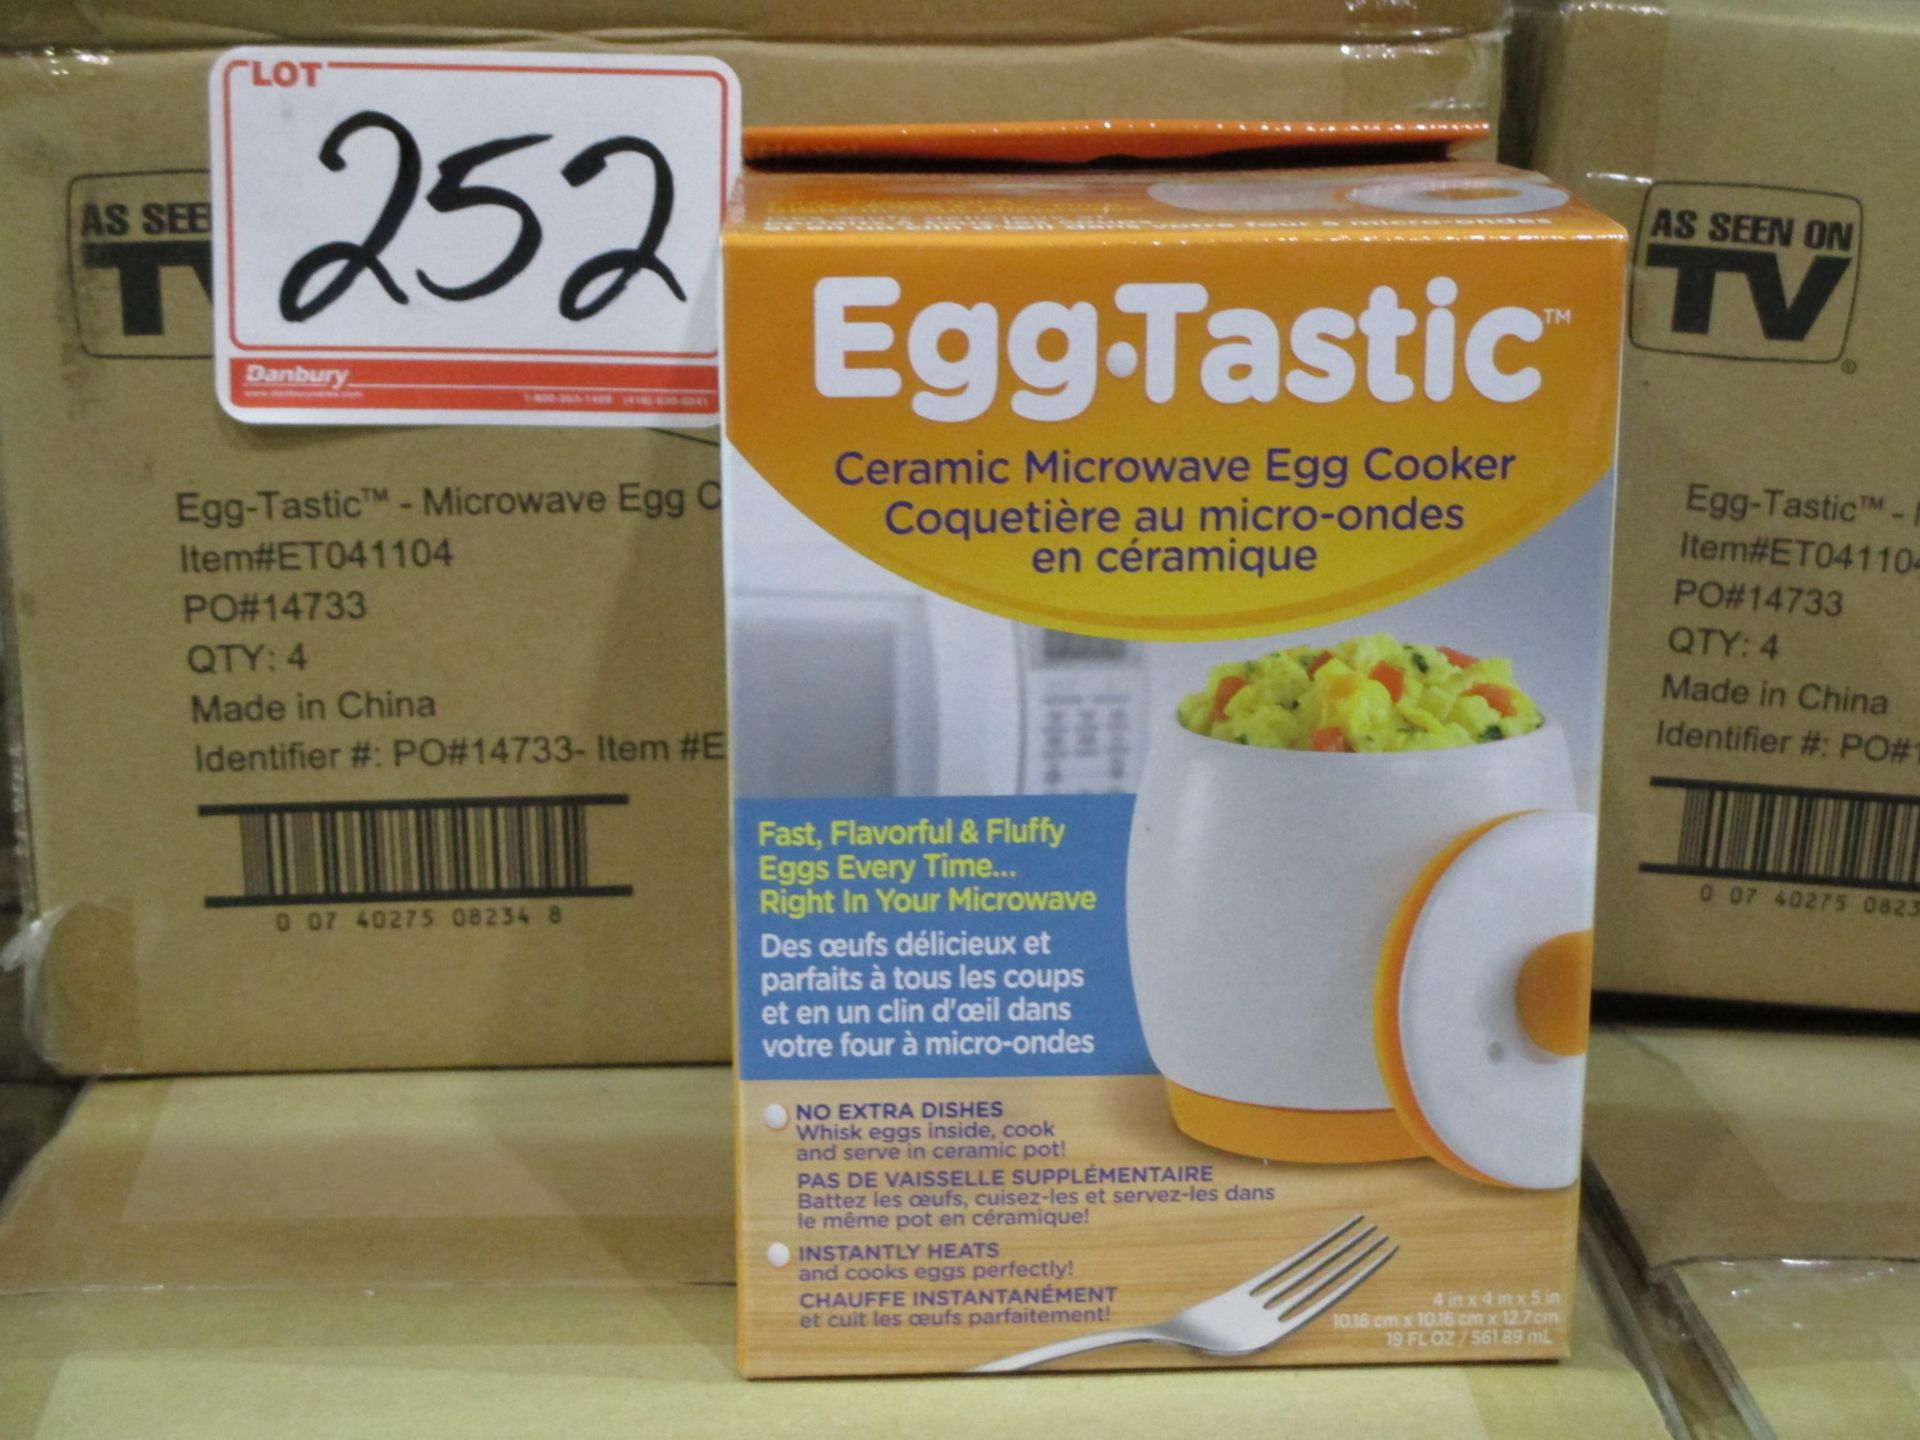 UNITS - EGG-TASTIC EGG COOKERS (4 UNITS/BOX - 57 BOXES)